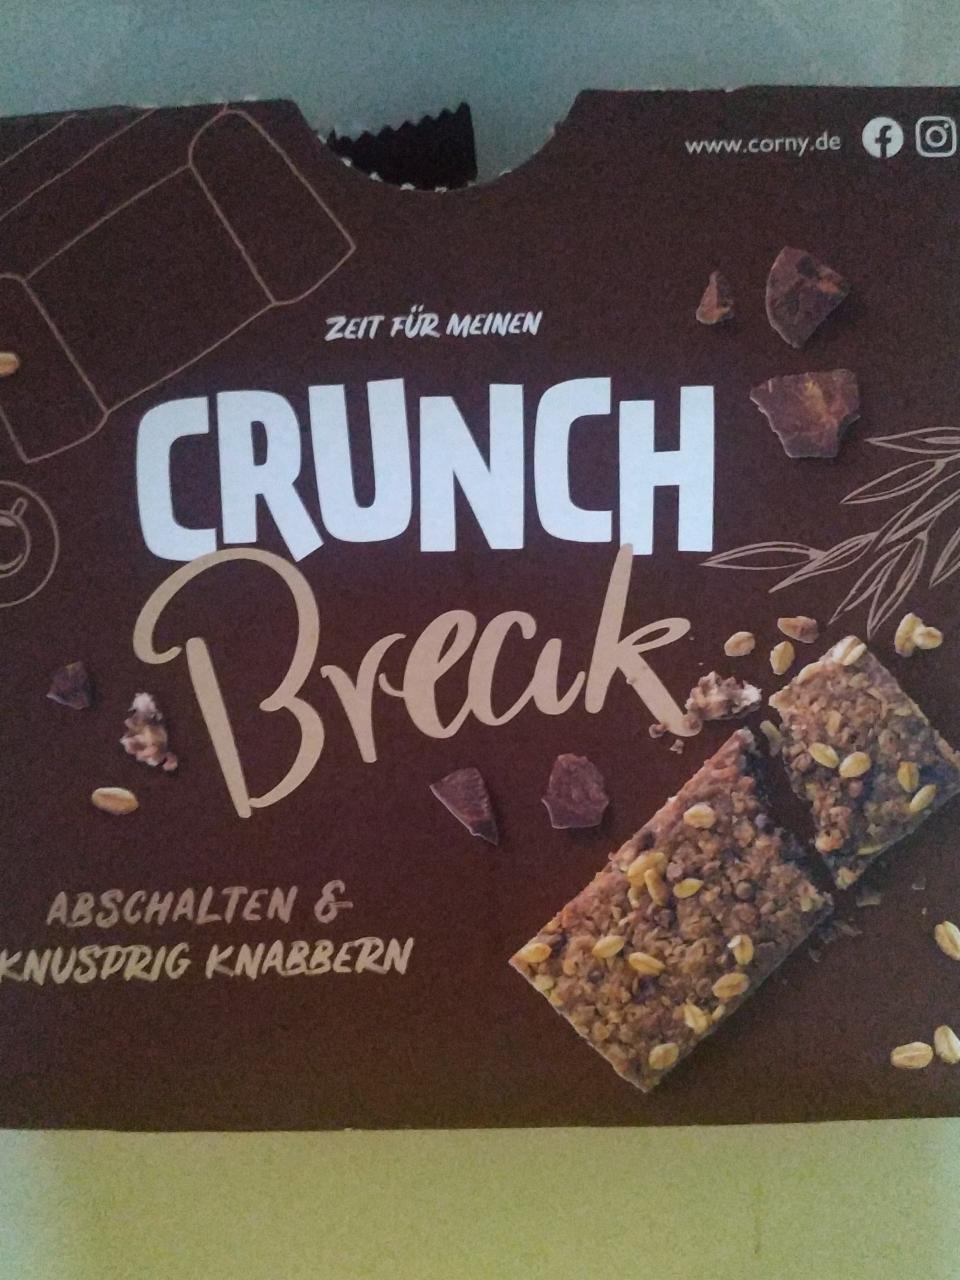 Фото - Кранчи шоколадные Crunch Breck Corny